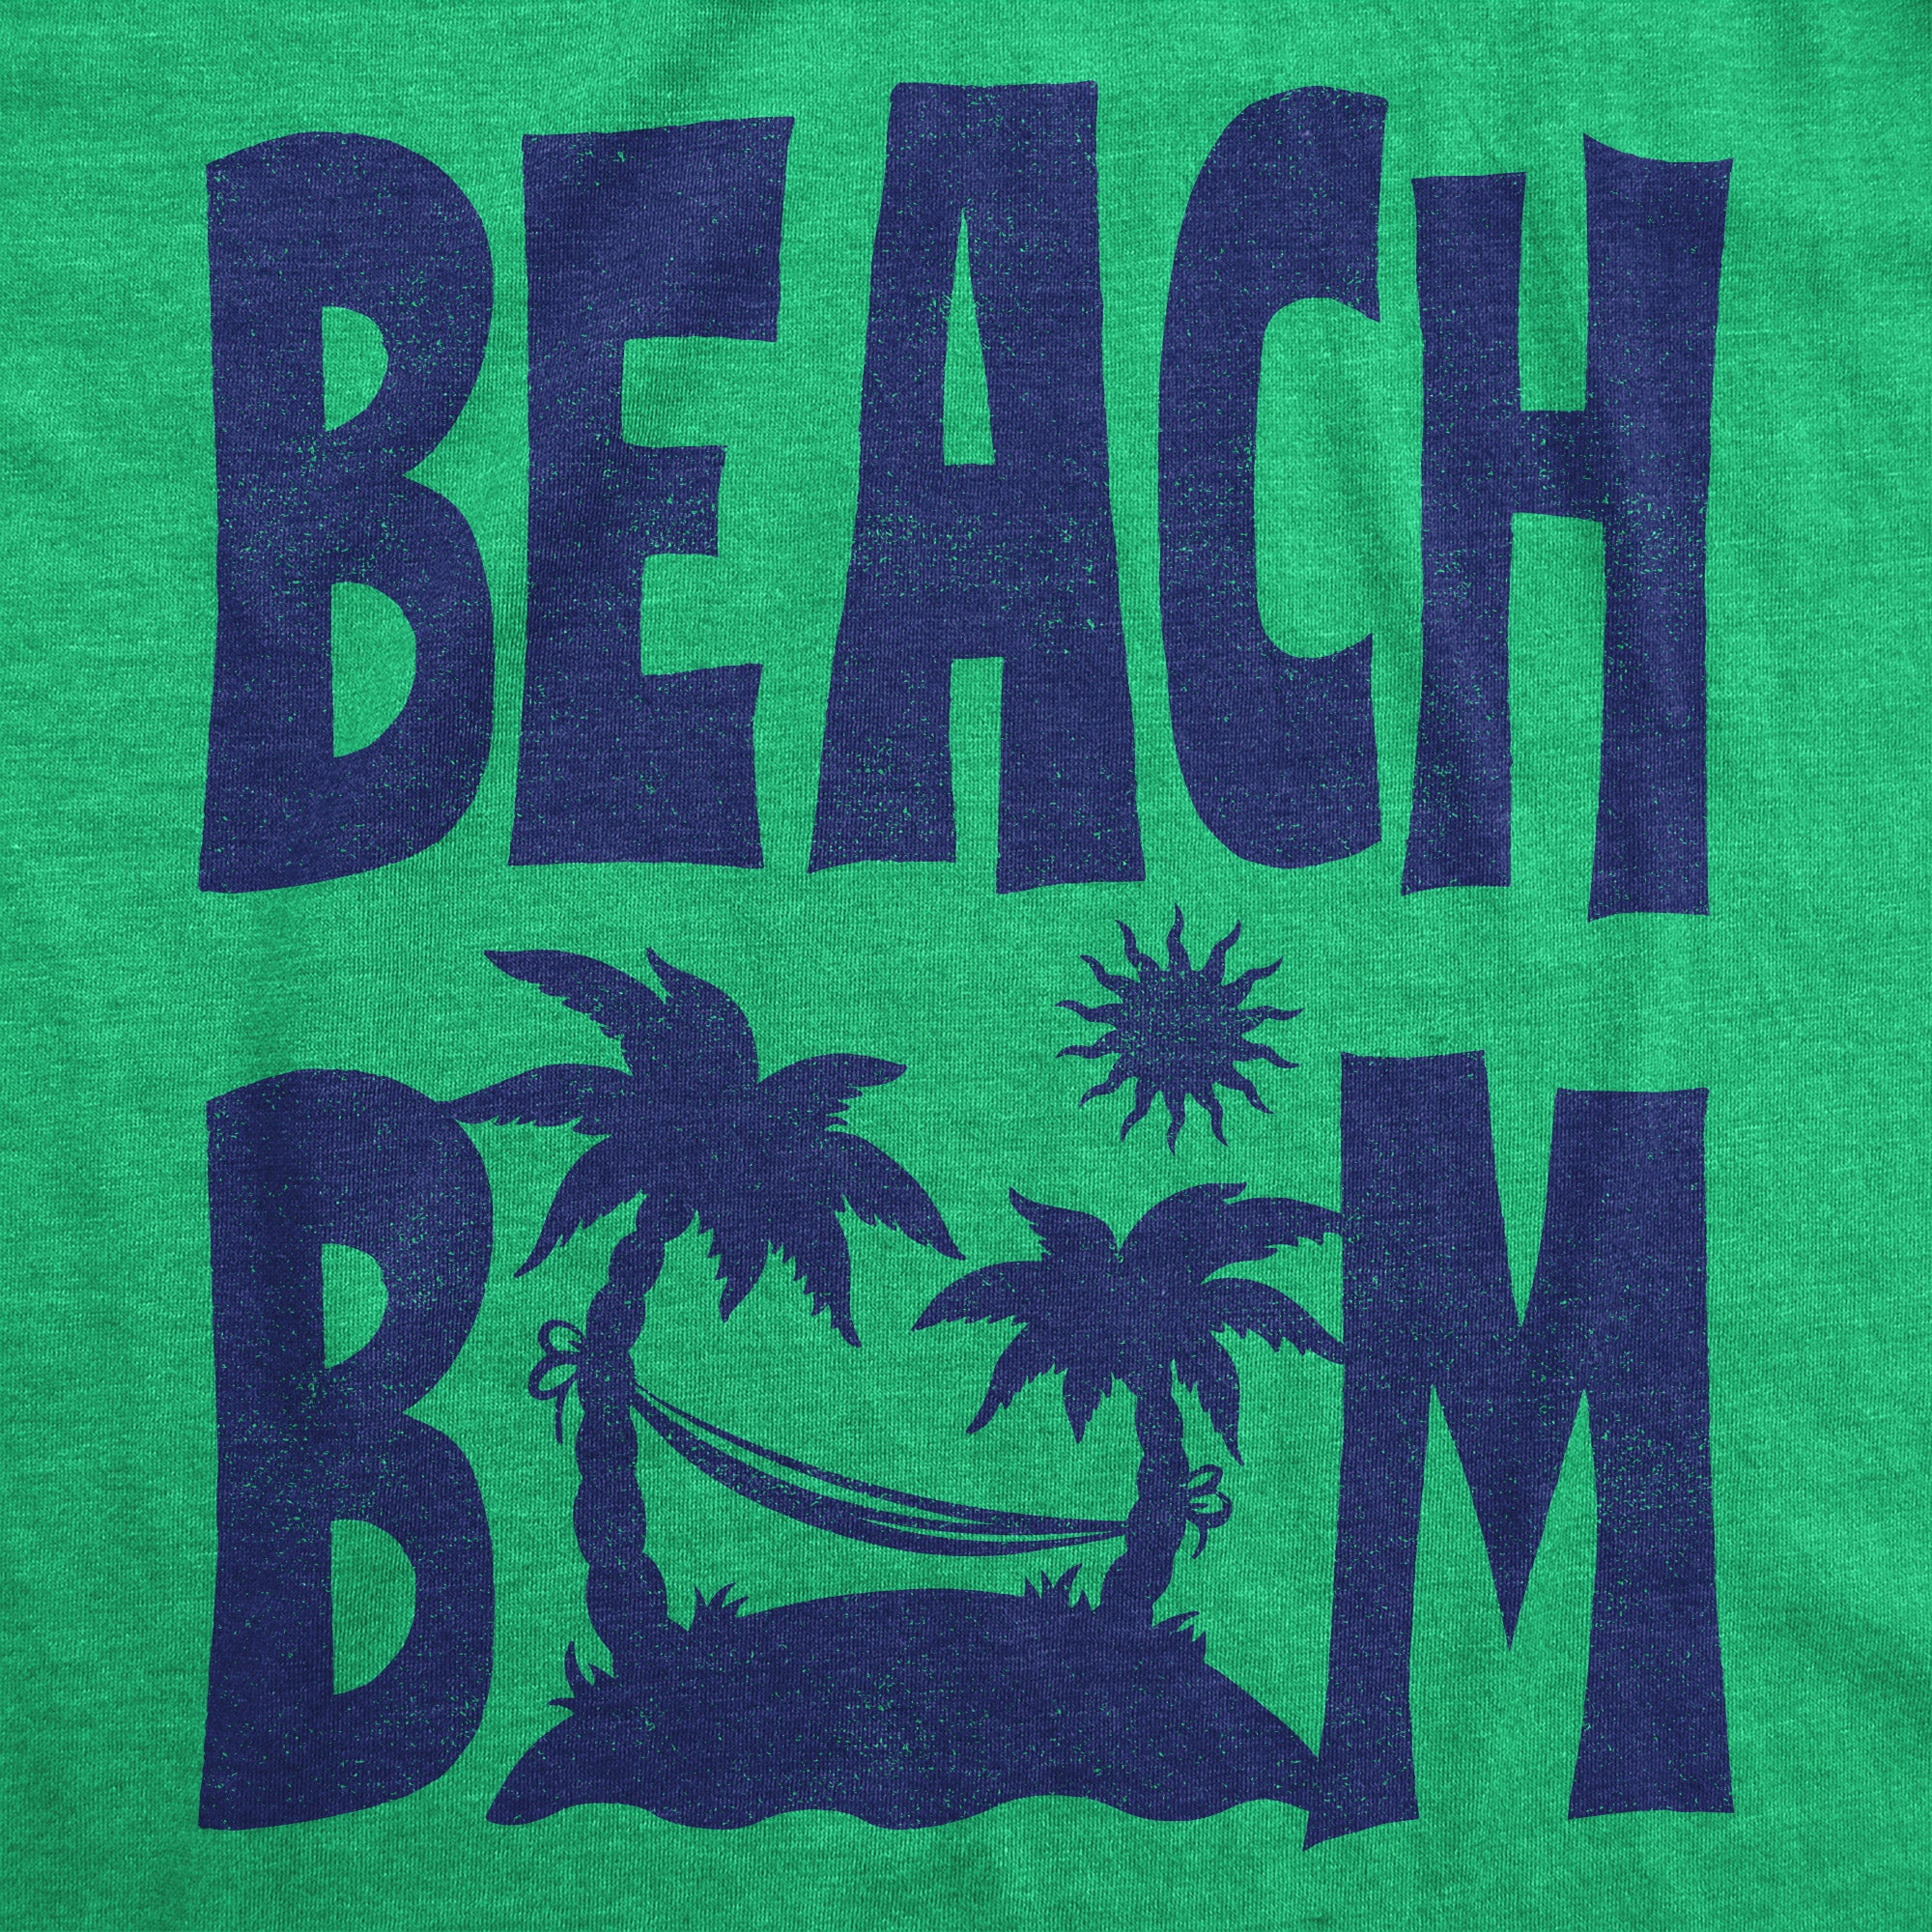 Funny Heather Green - BEACHBUM Beach Bum Mens T Shirt Nerdy Vacation sarcastic Tee